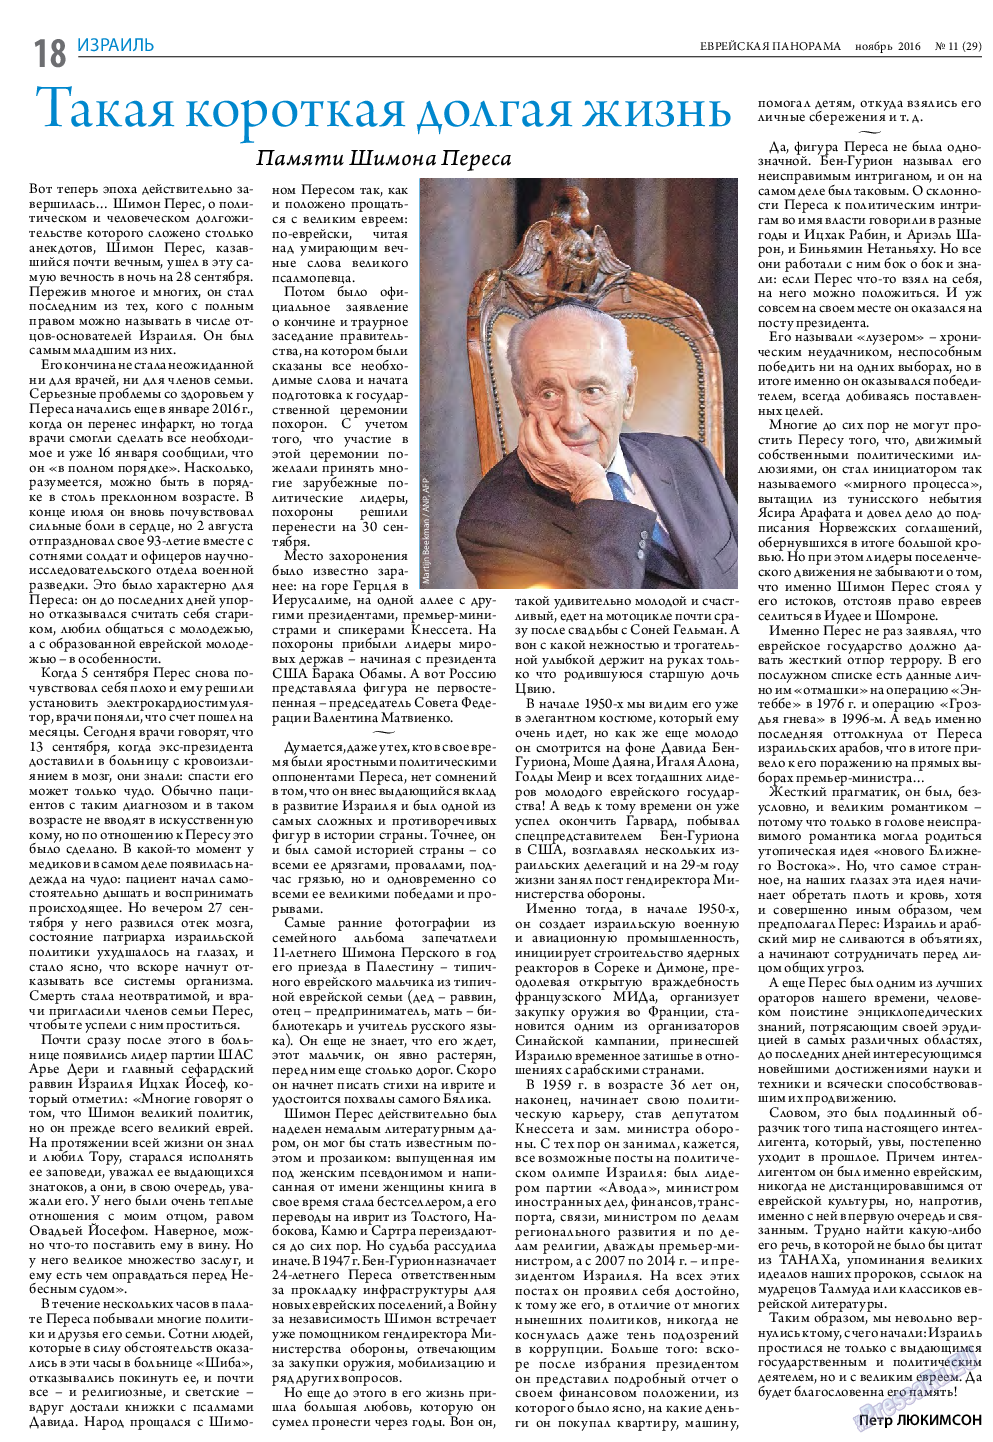 Еврейская панорама, газета. 2016 №11 стр.18